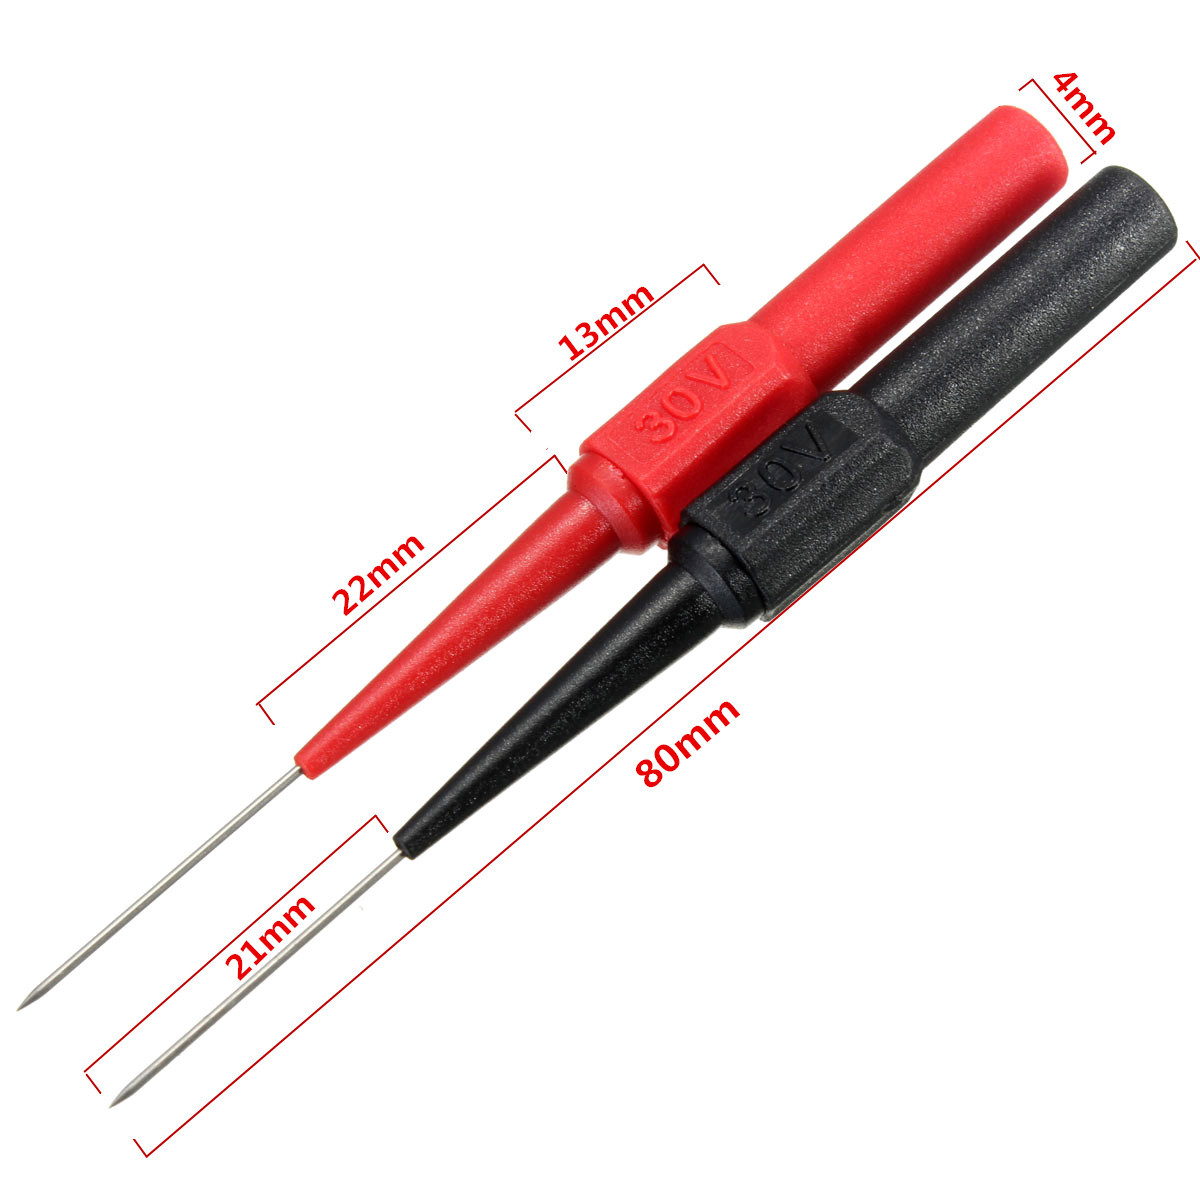 DANIU-Insulation-Piercing-Needle-Non-destructive-Multimeter-Test-Probes-RedBlack-1024378-1